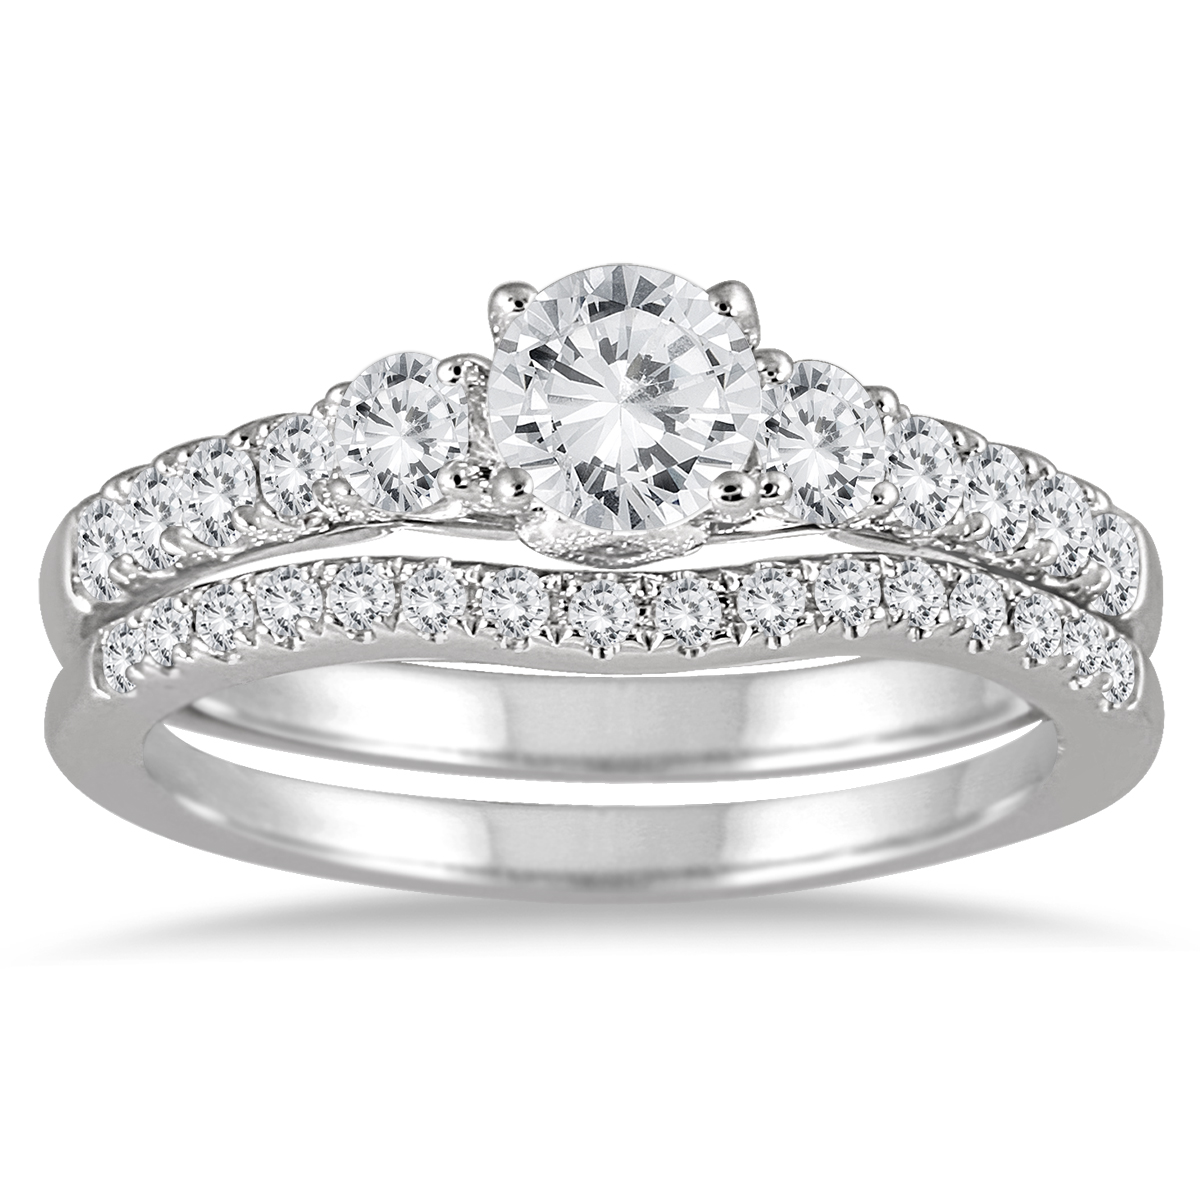 1 1/10 Carat TW Diamond Bridal Set in 14K White Gold